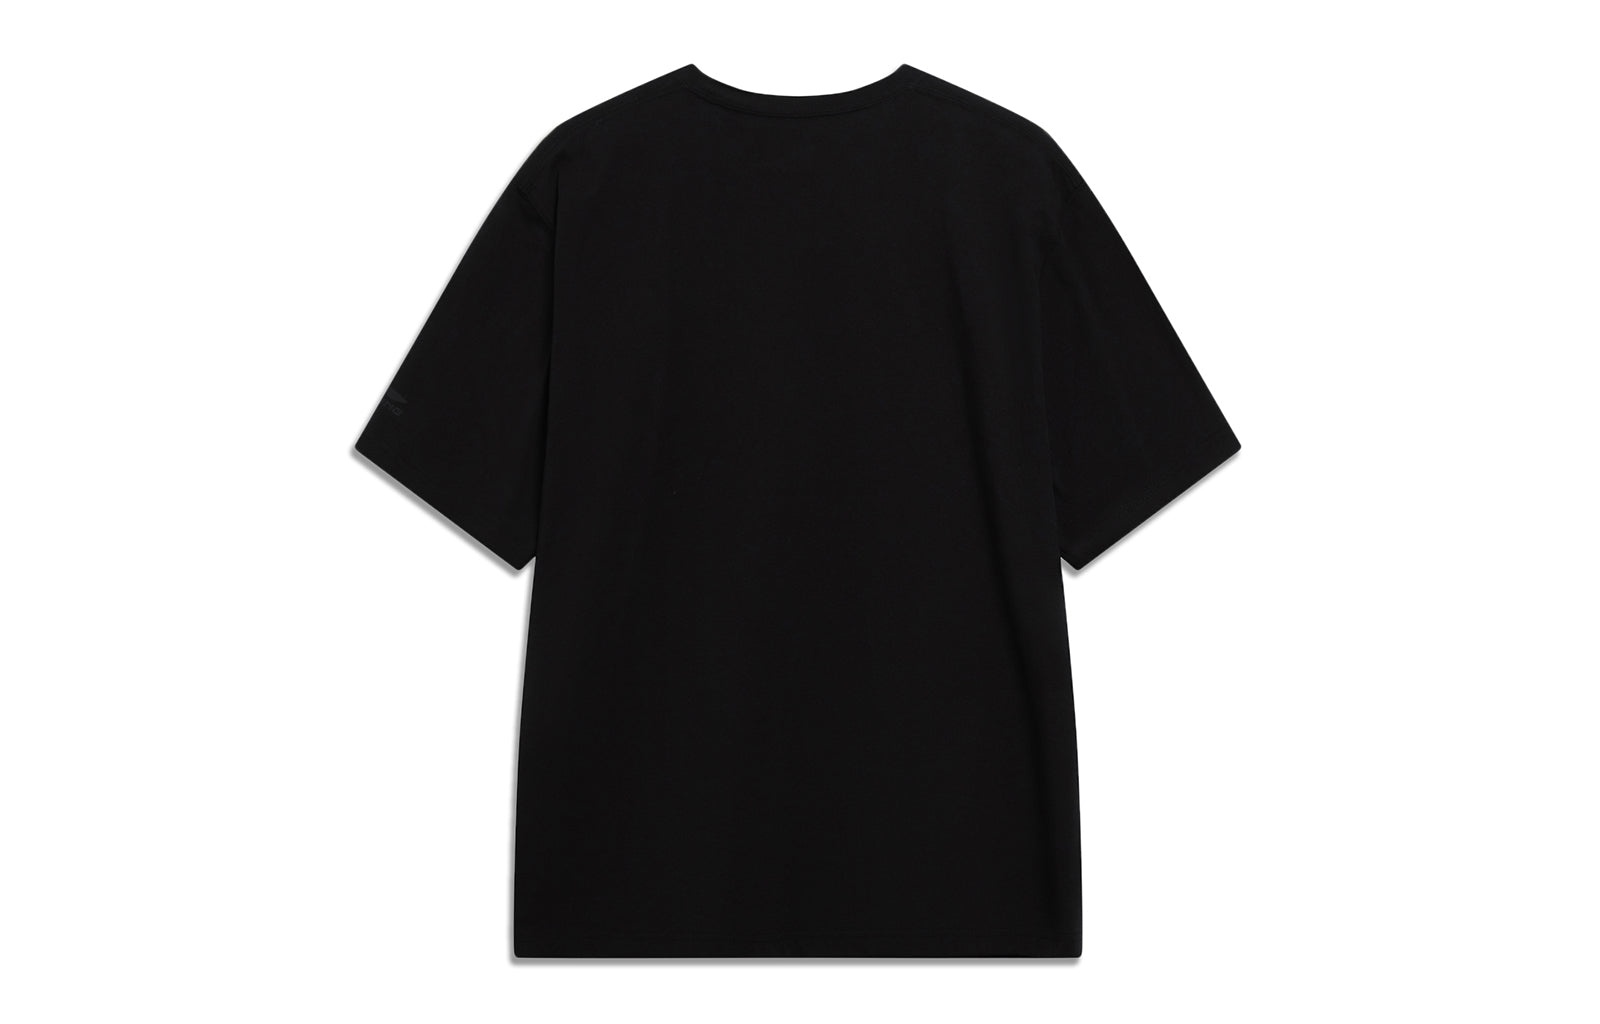 Li-Ning Small Tree Graphic T-shirt 'Black' AHST183-4 - 2